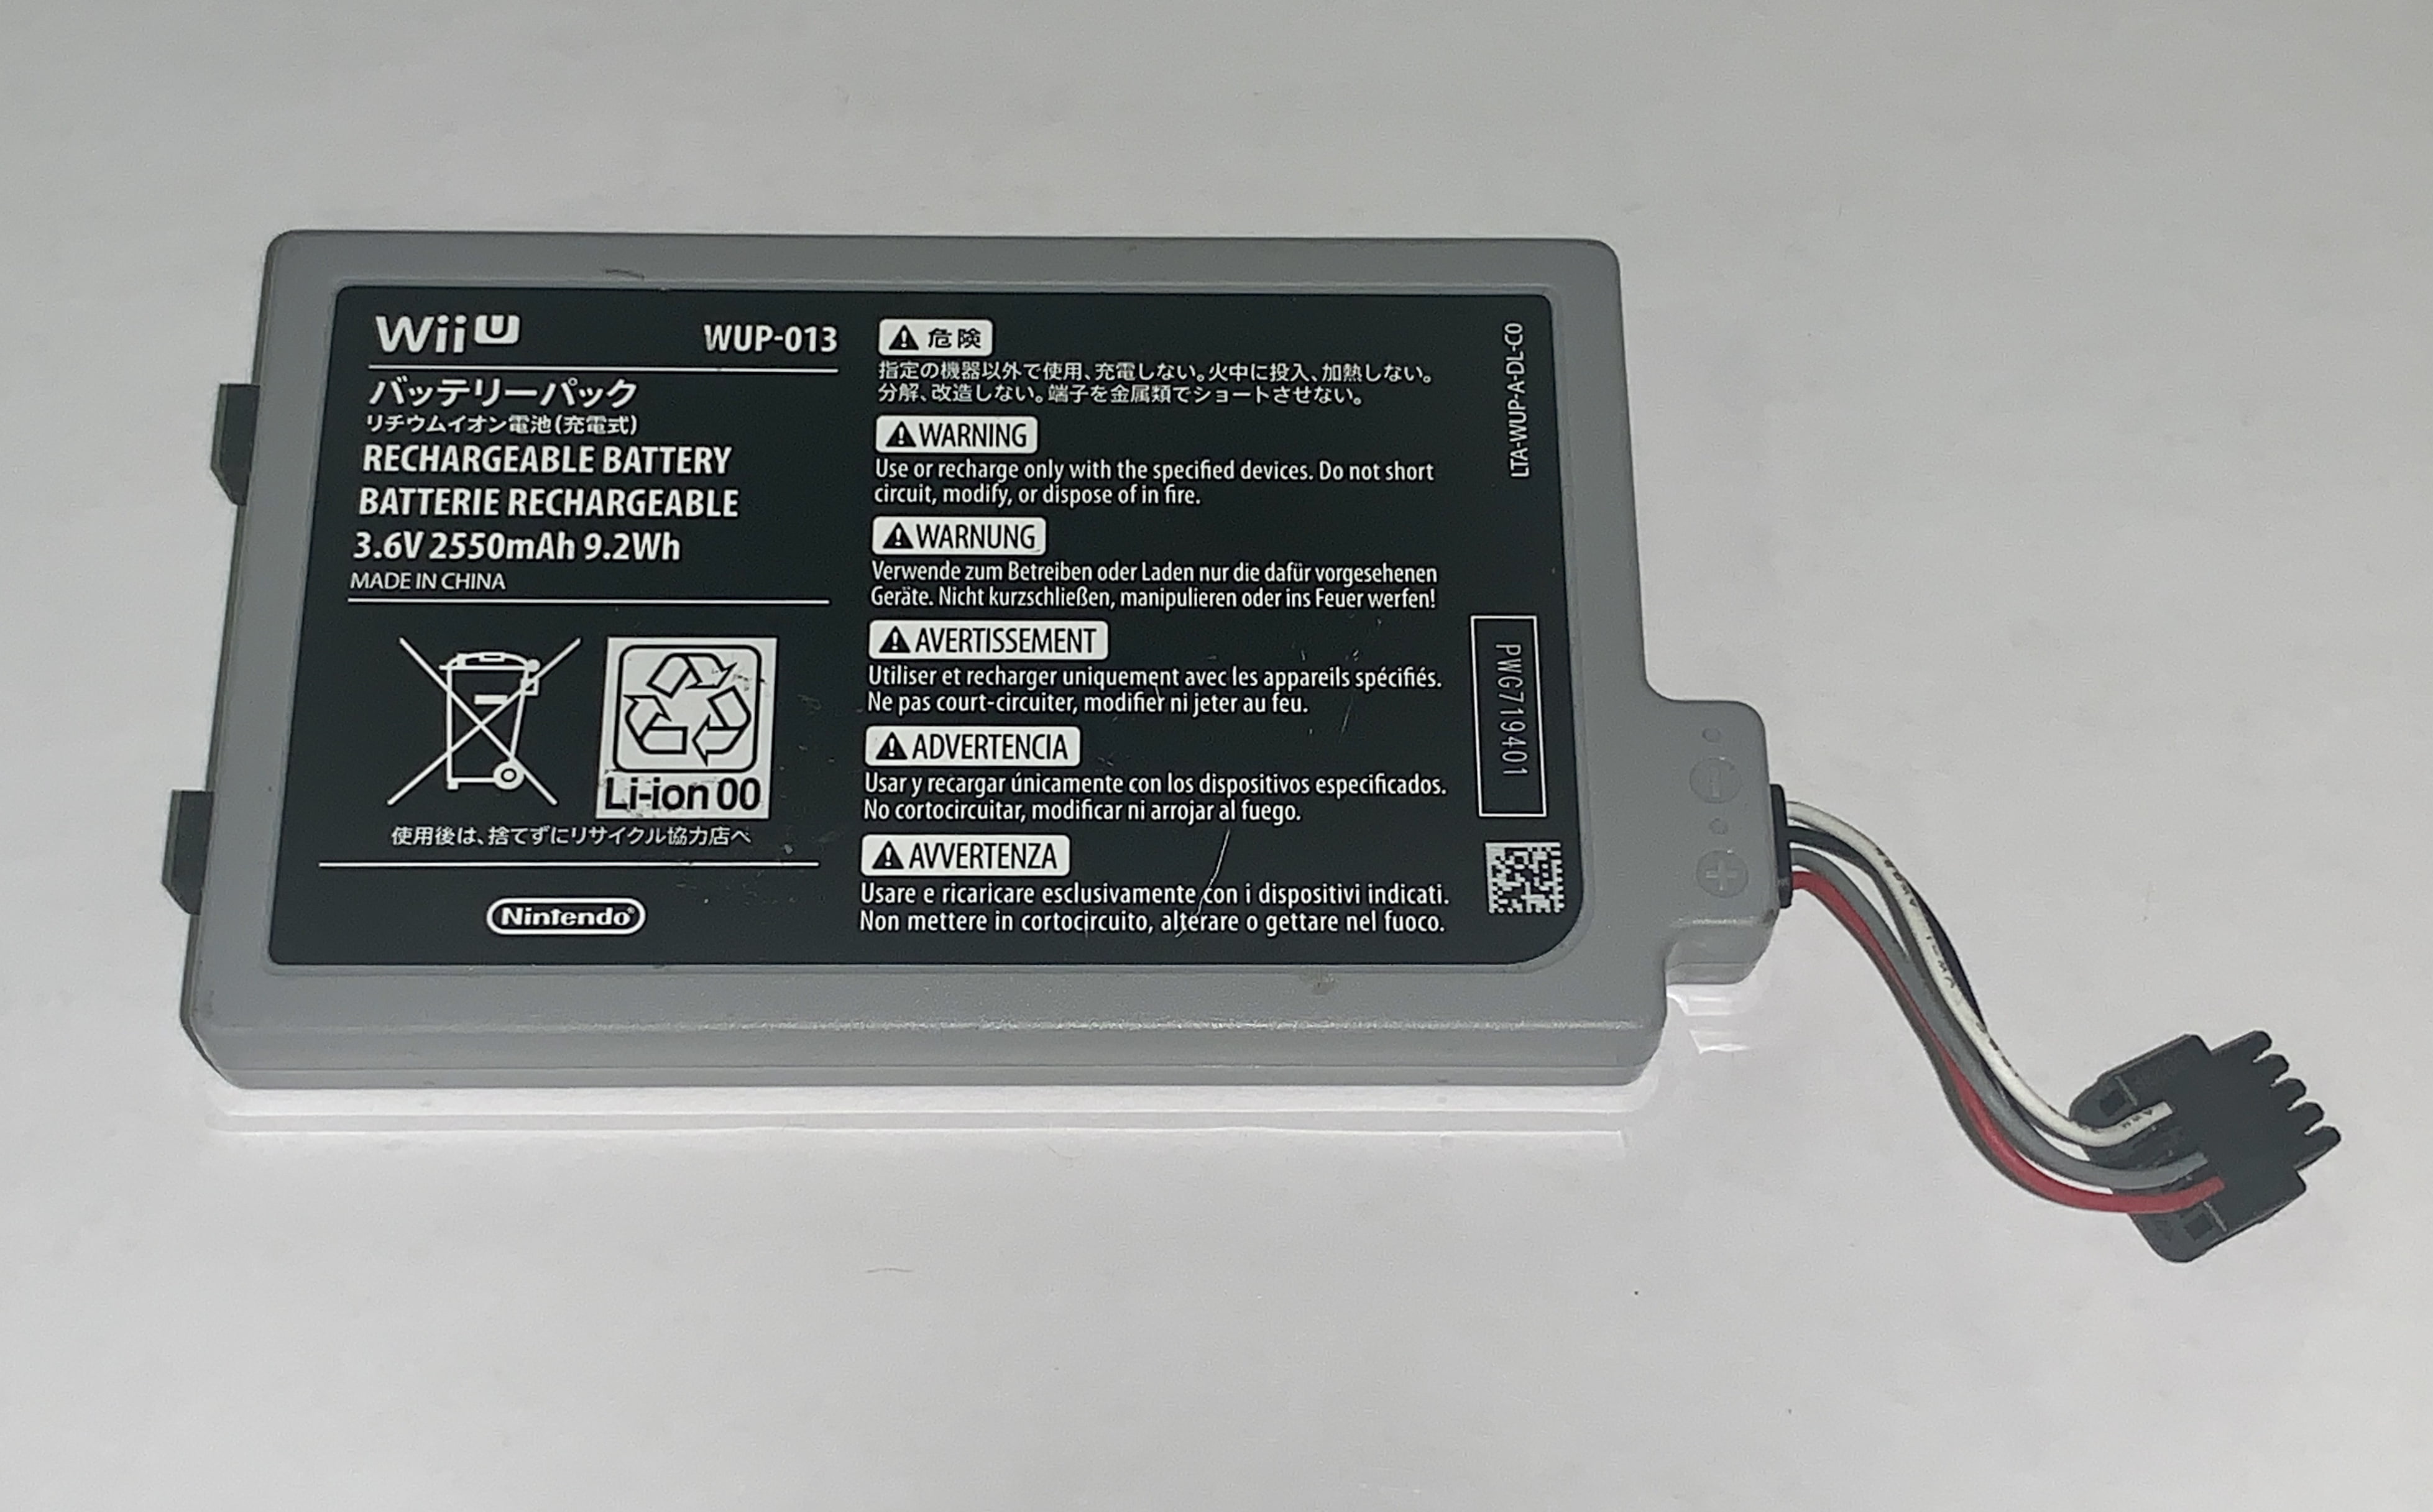 Nintendo Wiiu Gamepad Replacement Extended Battery Wup 013 3 6v 2550mah Walmart Com Walmart Com